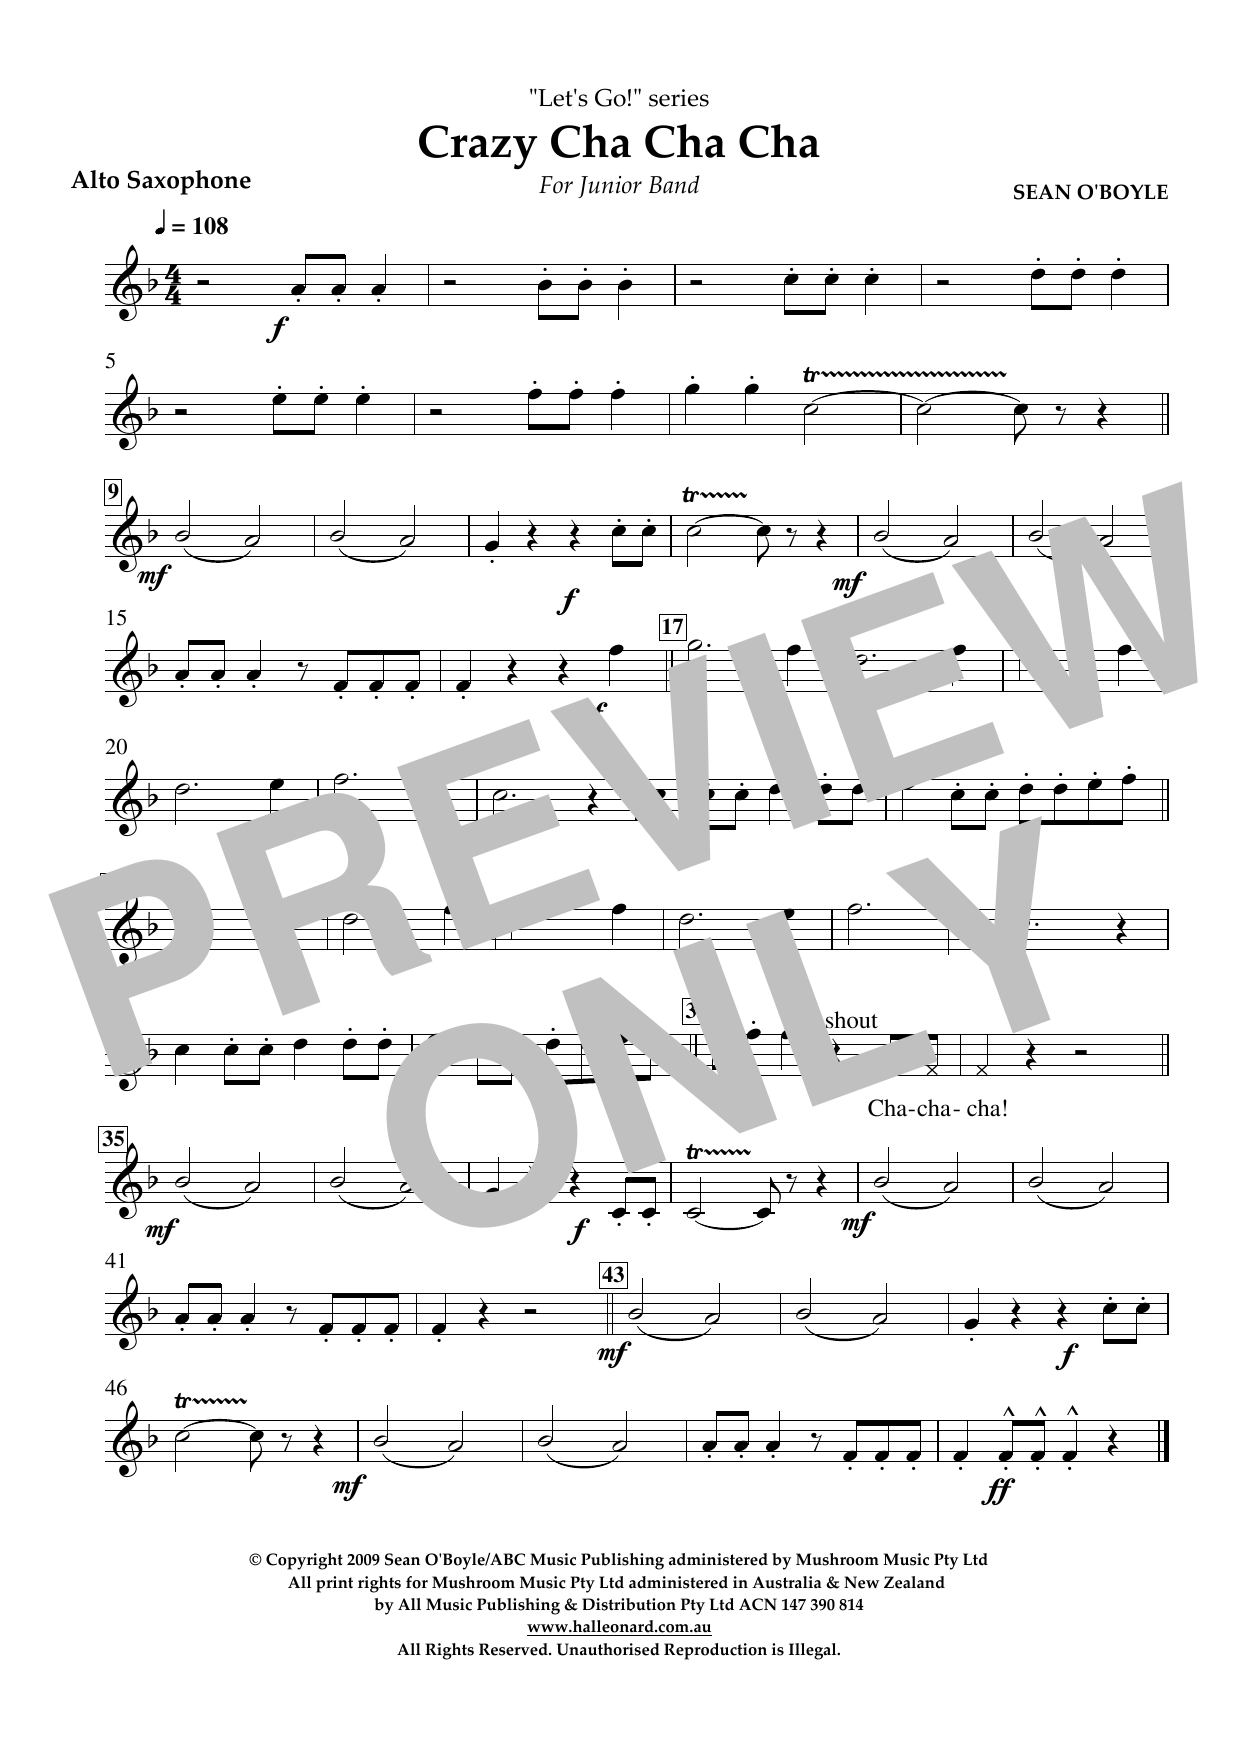 Sean O'Boyle Crazy Cha Cha Cha - Alto Saxophone Sheet Music Notes & Chords for Concert Band - Download or Print PDF